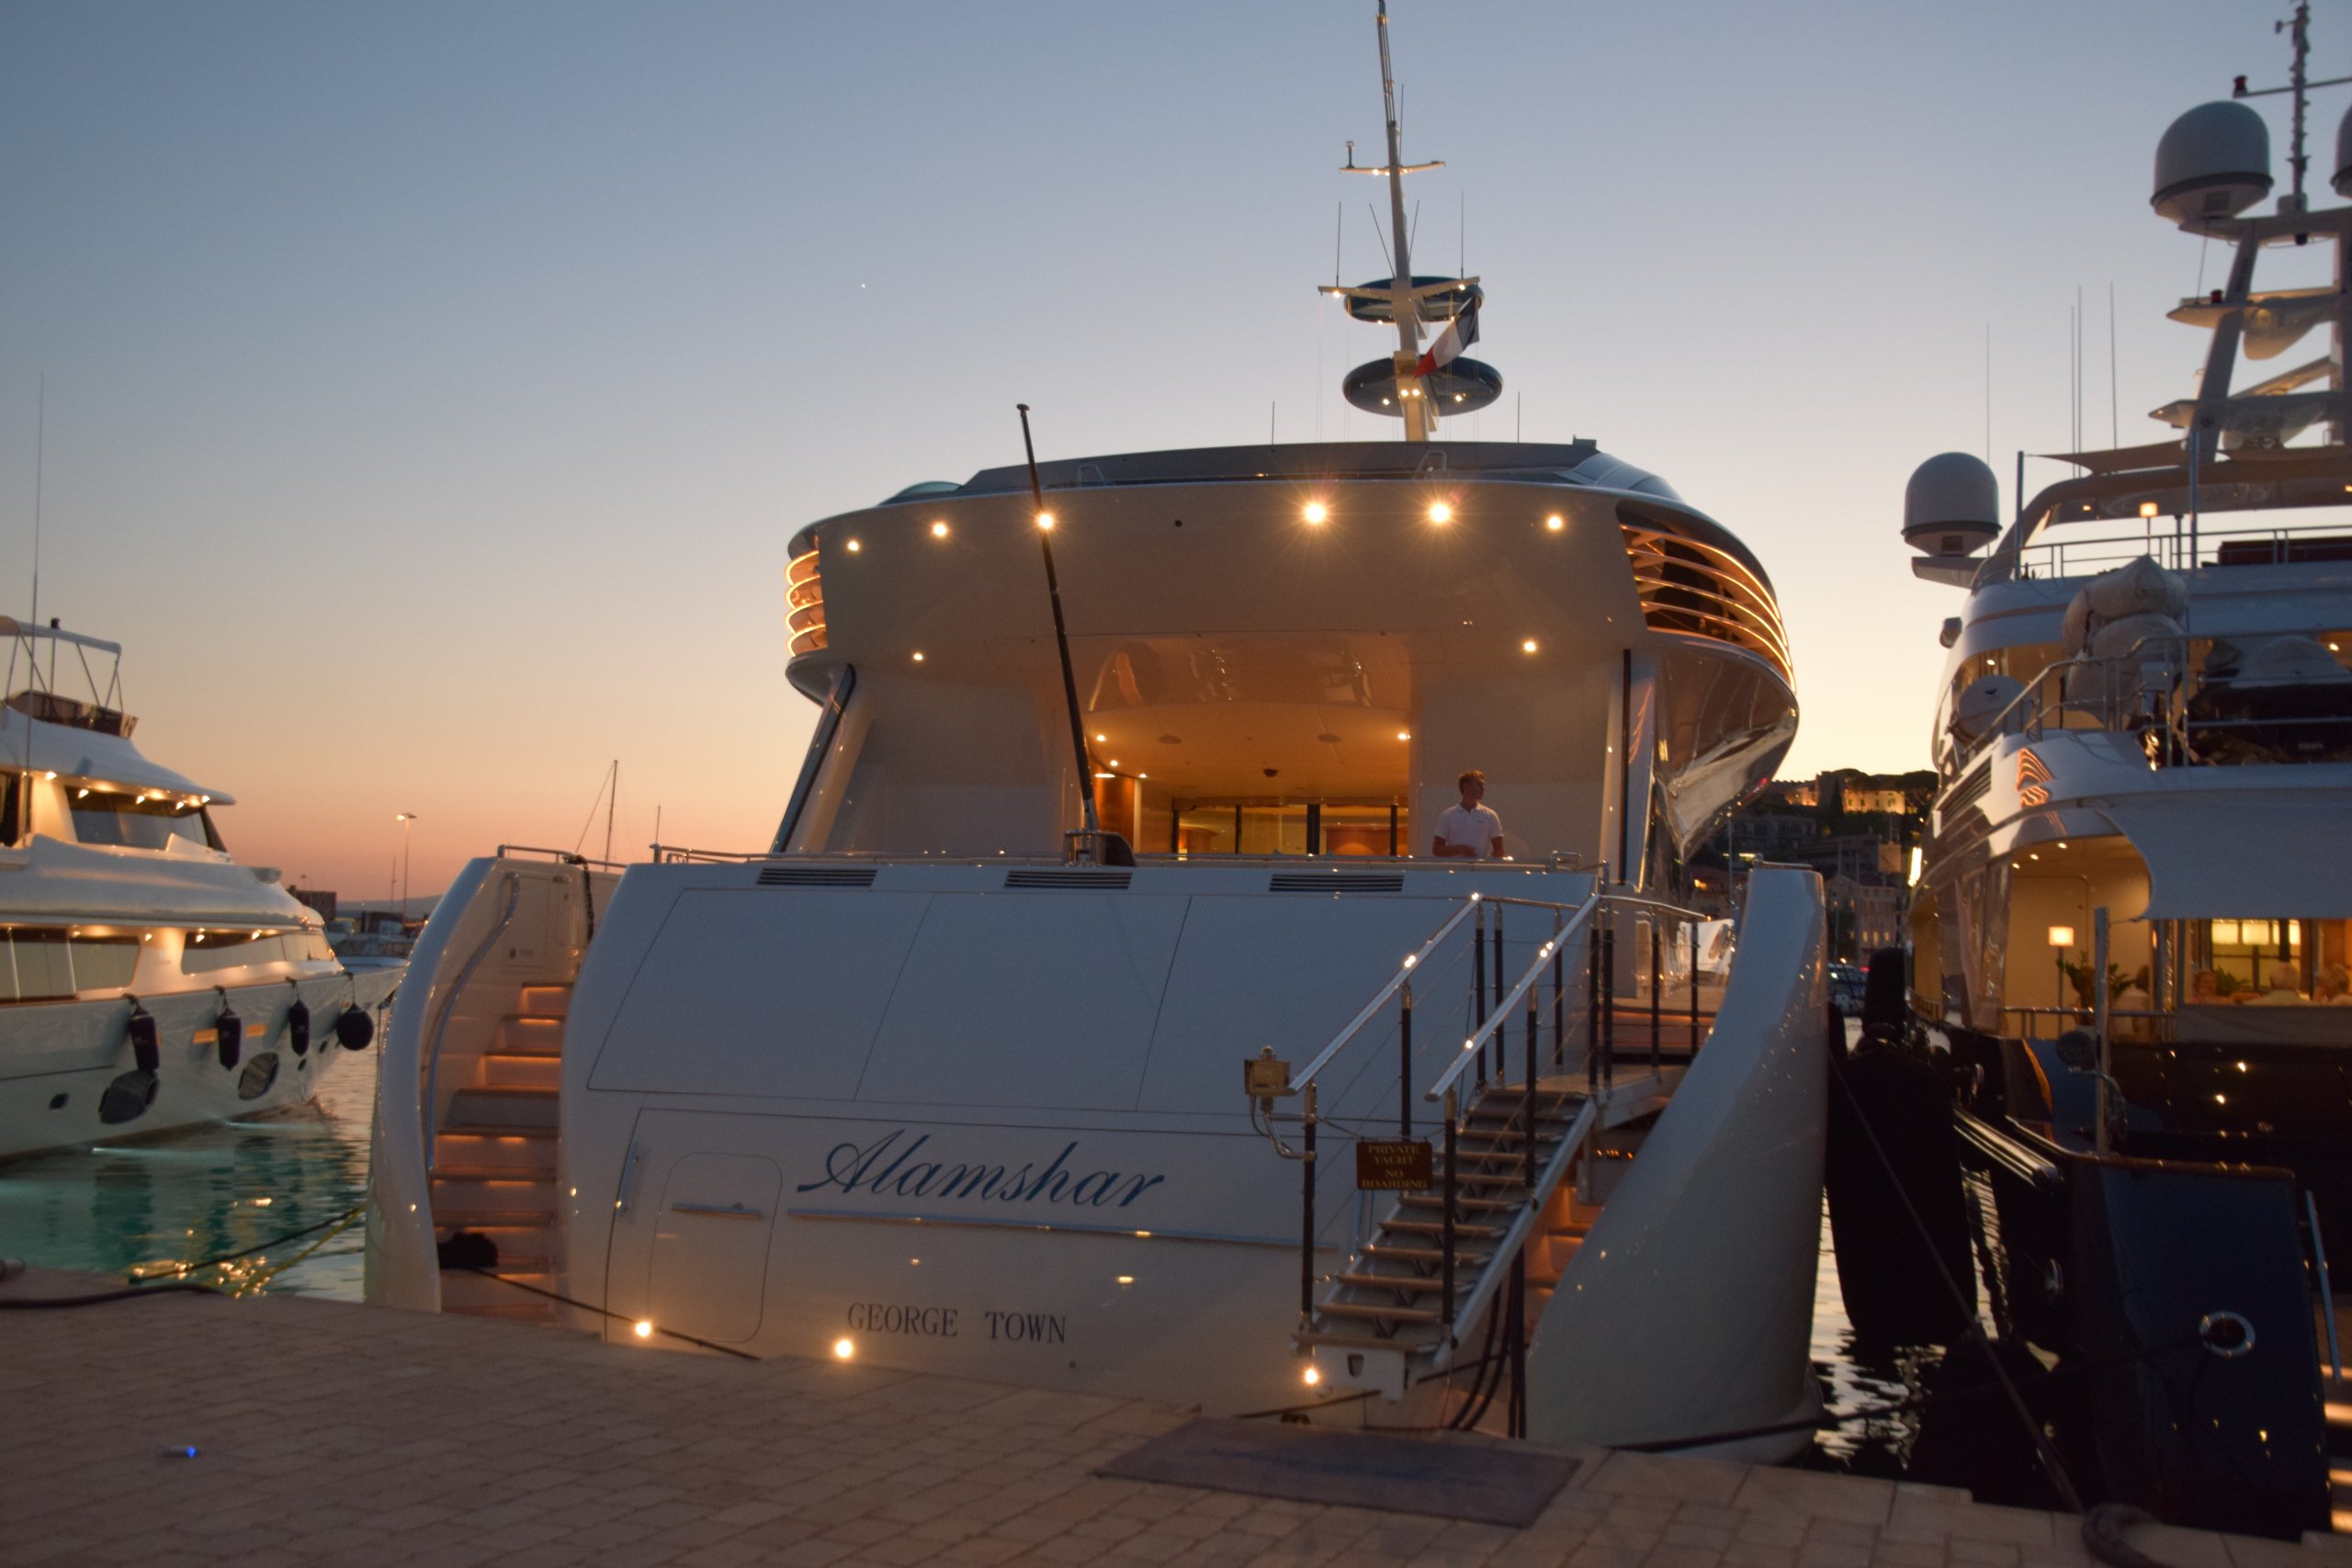 Yacht Alamshar • Devonport • 2014 • Photos & Video